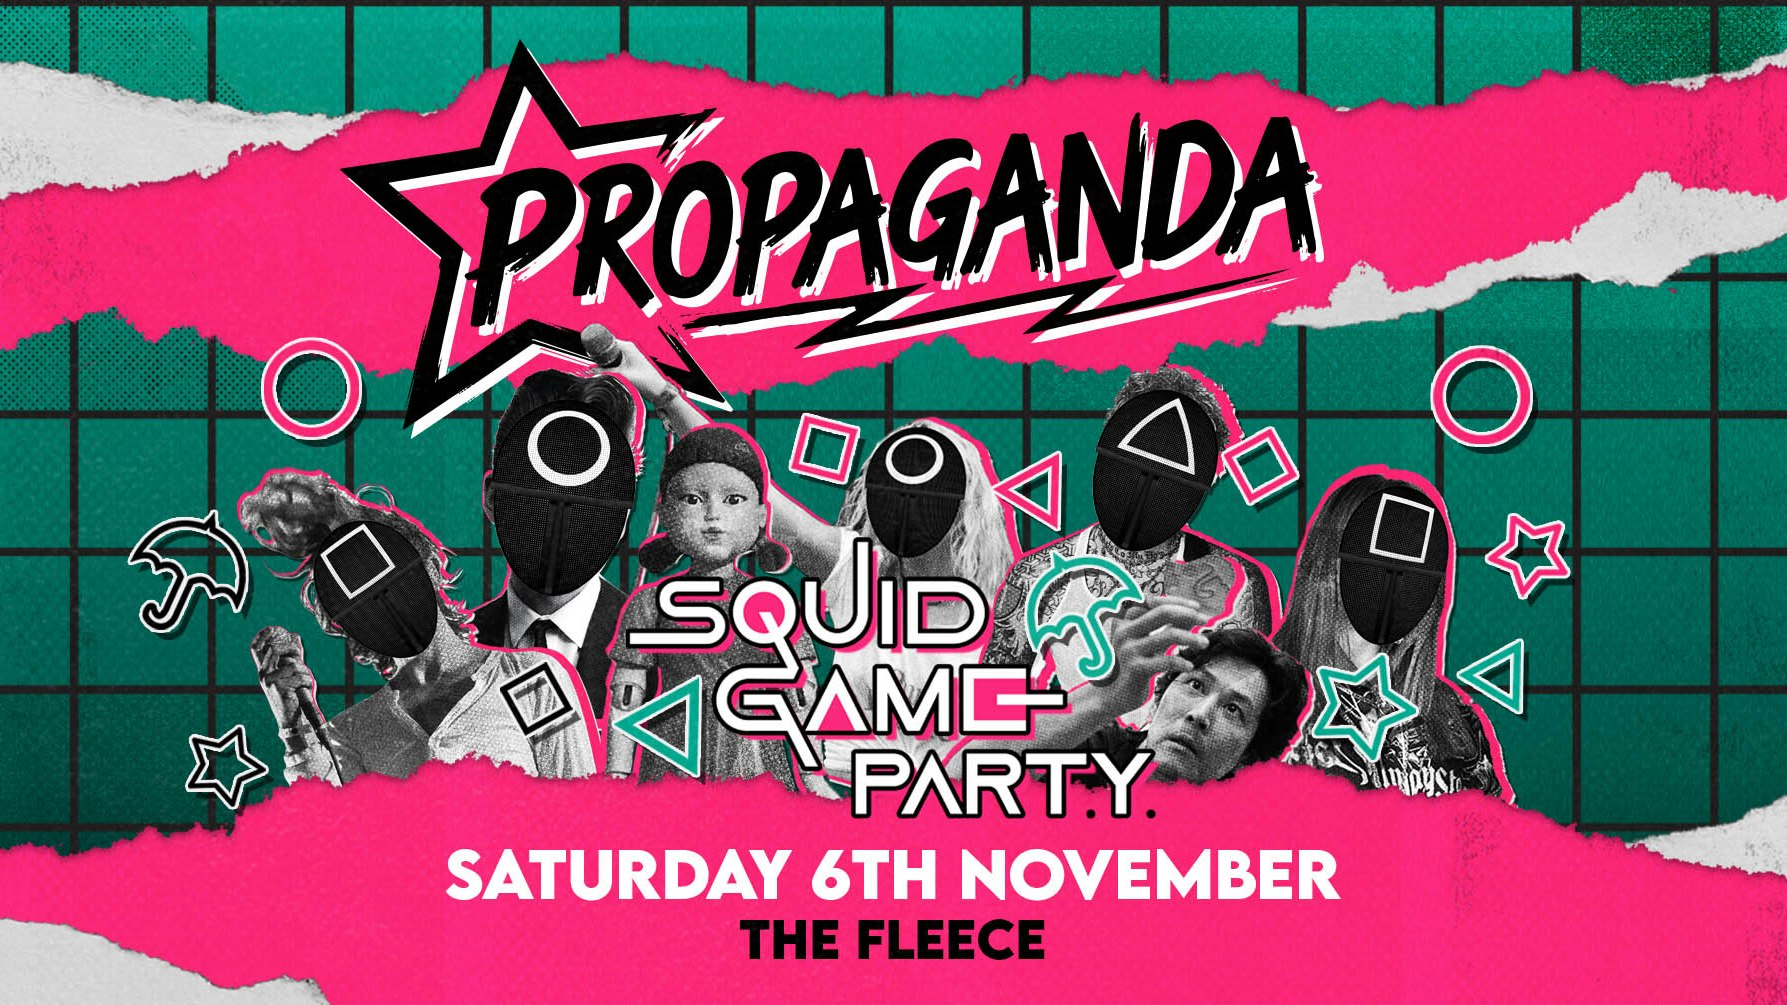 Propaganda Bristol – Squid Game Party!